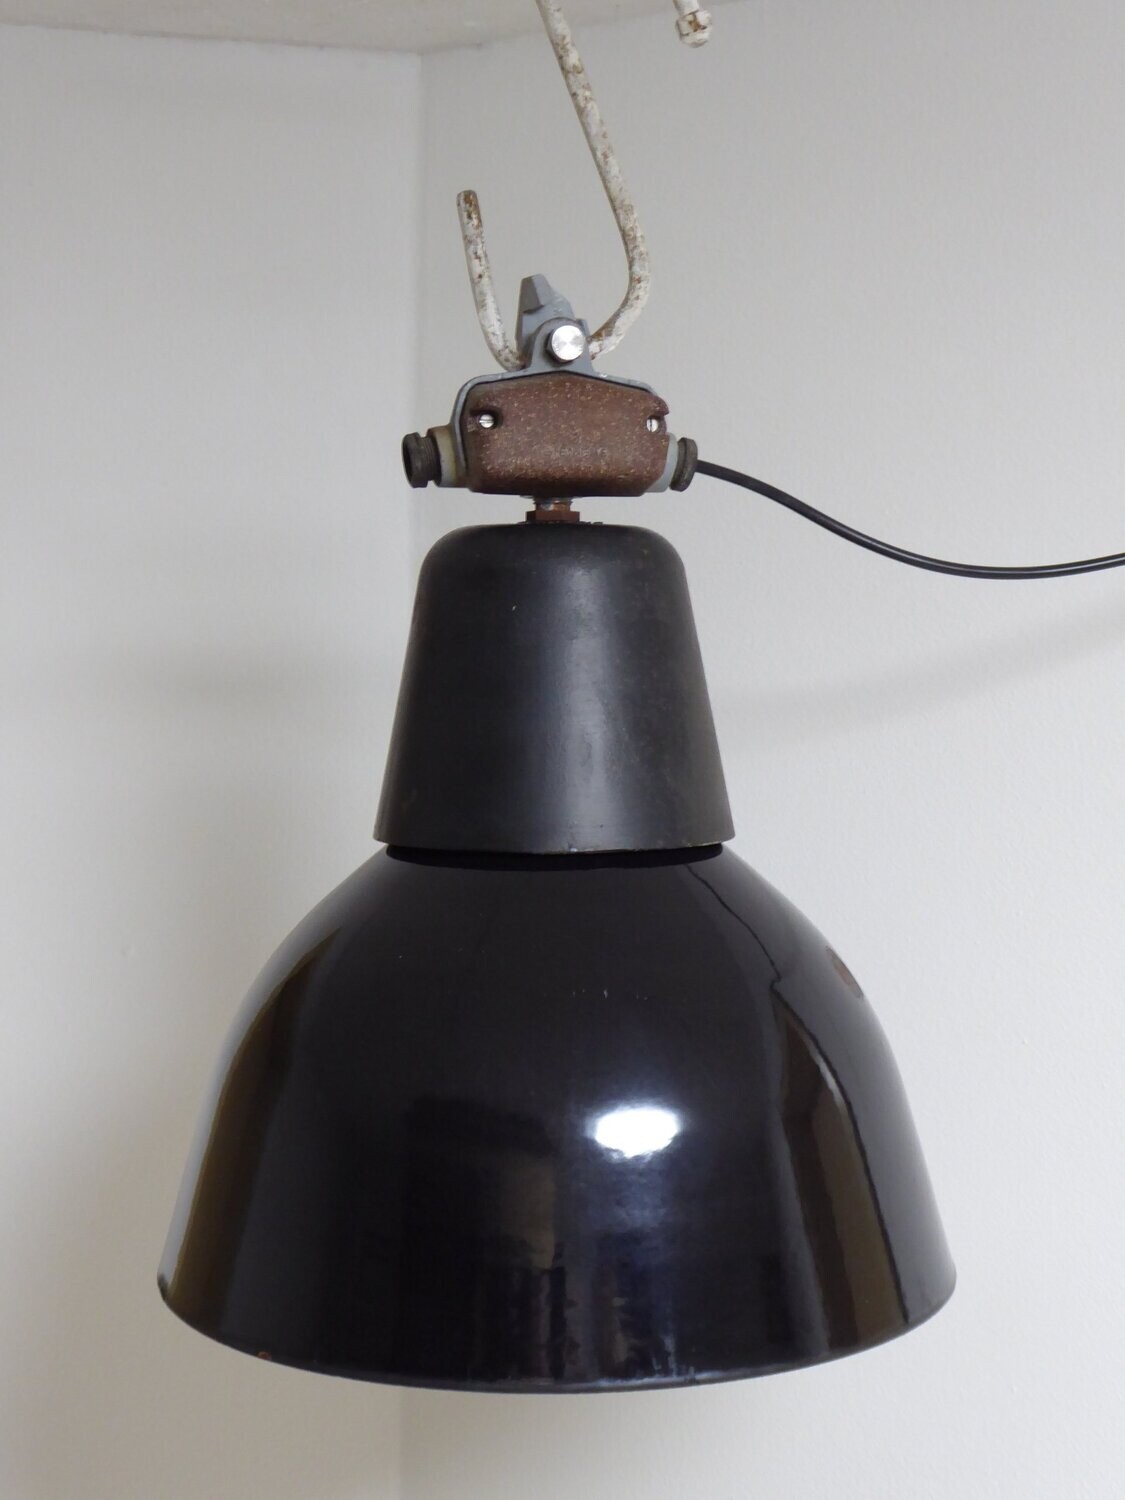 Originale Siemens Emaille Industrielampe Fabriklampe